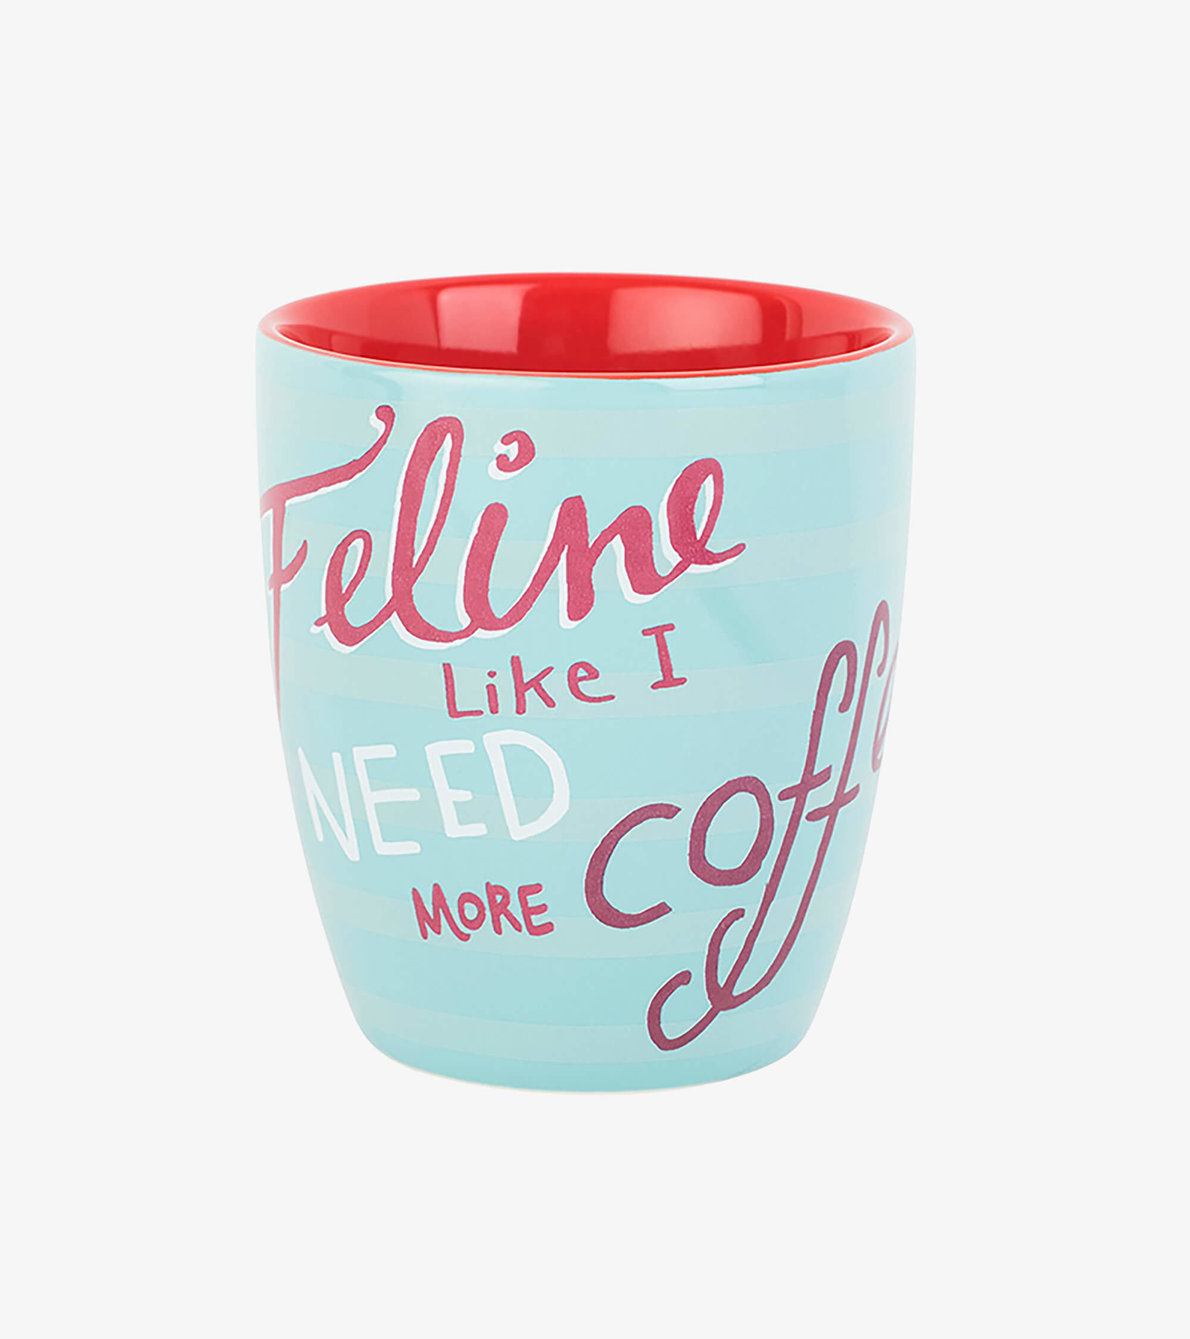 View larger image of Feline Like I Need More Coffee Curved Ceramic Mug